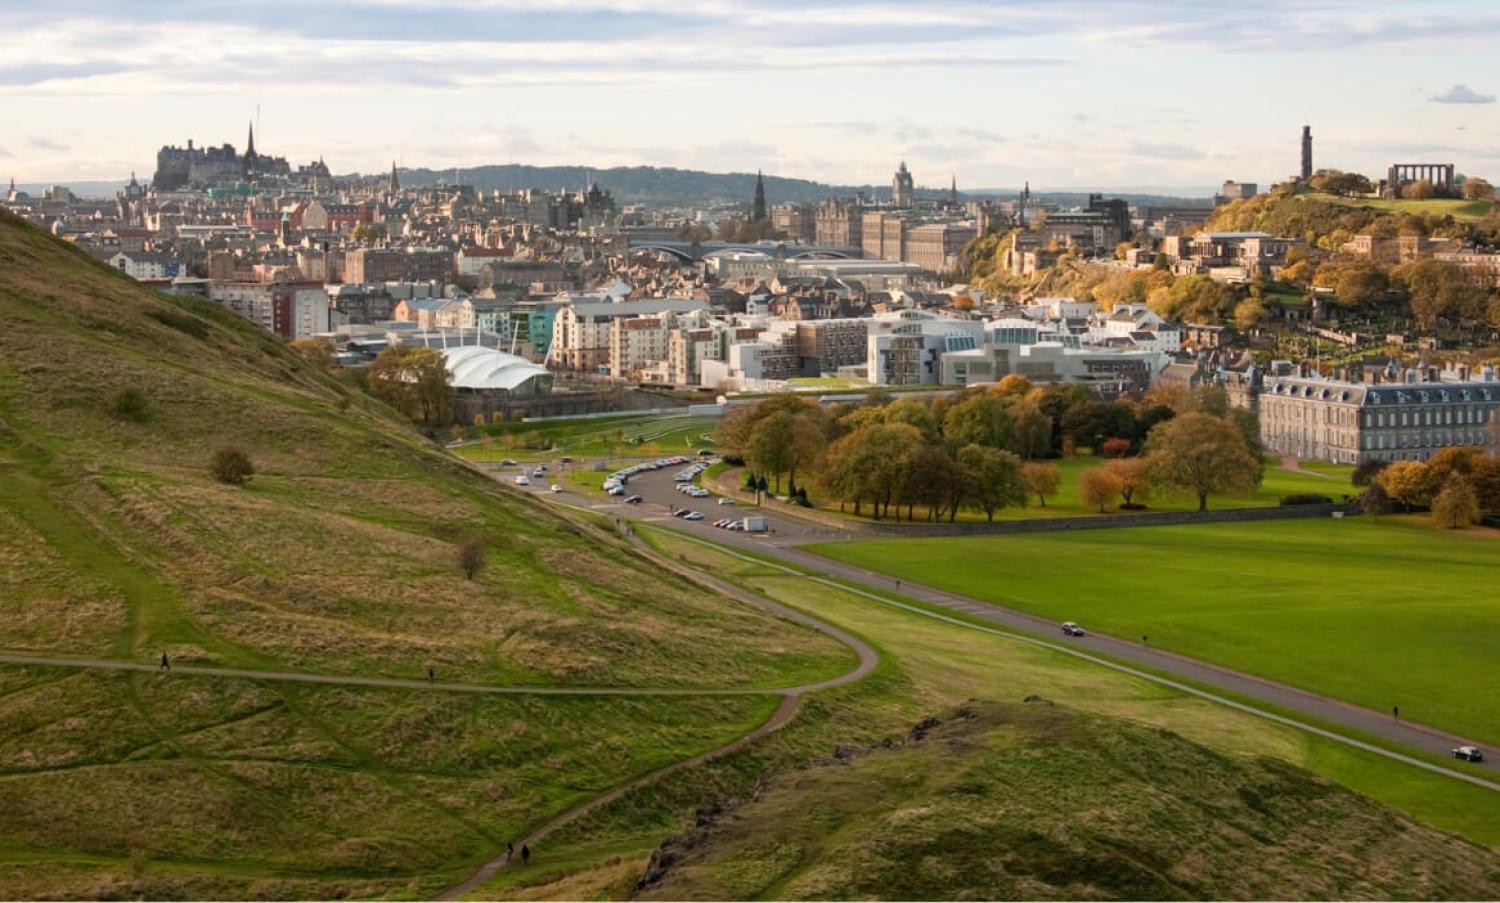 View of Edinburgh from Arthur's Seat.